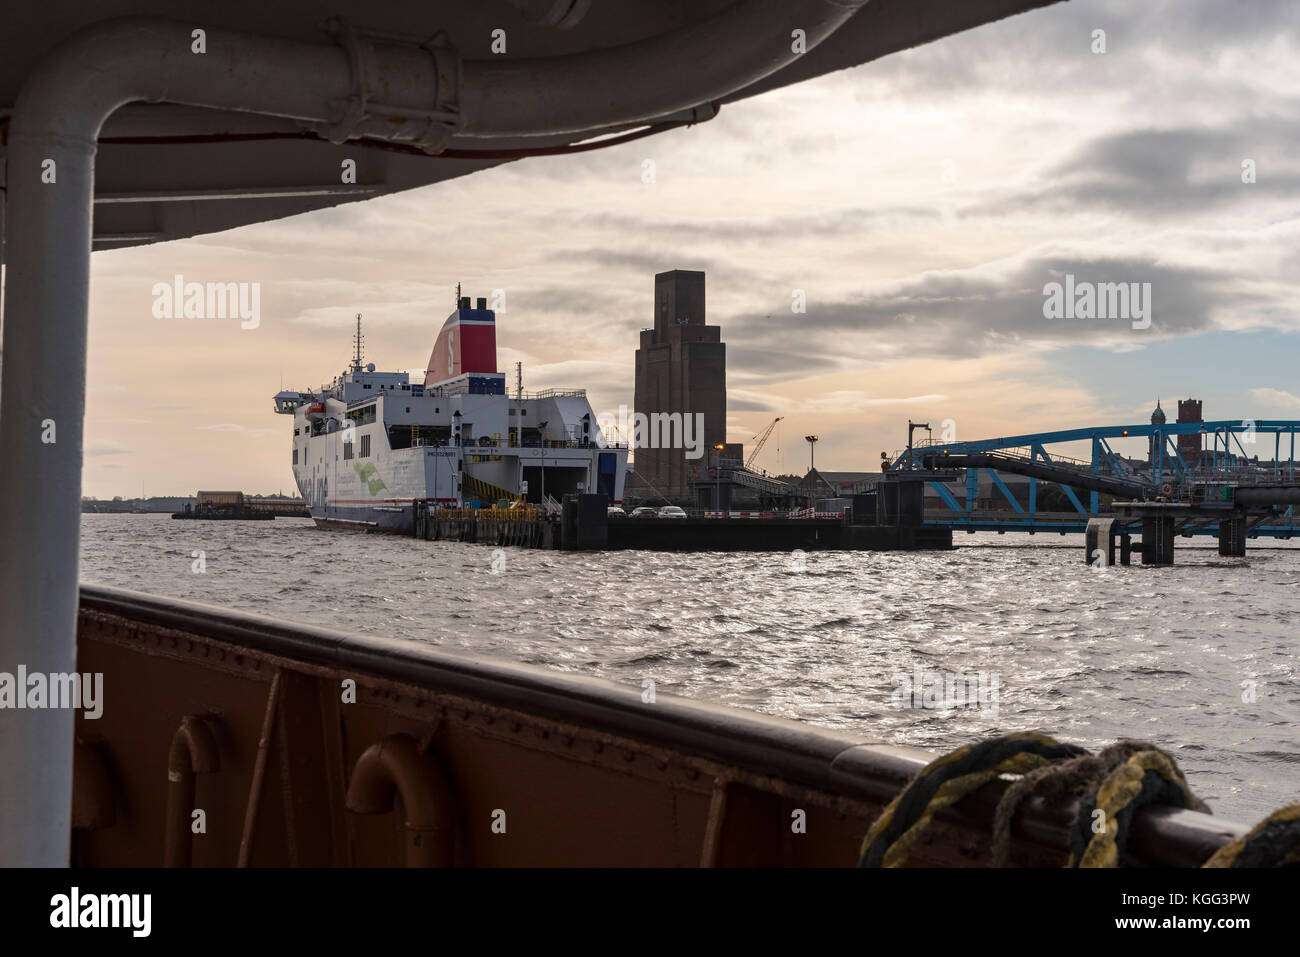 The ro-ro car ferry Stena Mersey at the Twelve Quays terminal in Birkenhead. Stock Photo